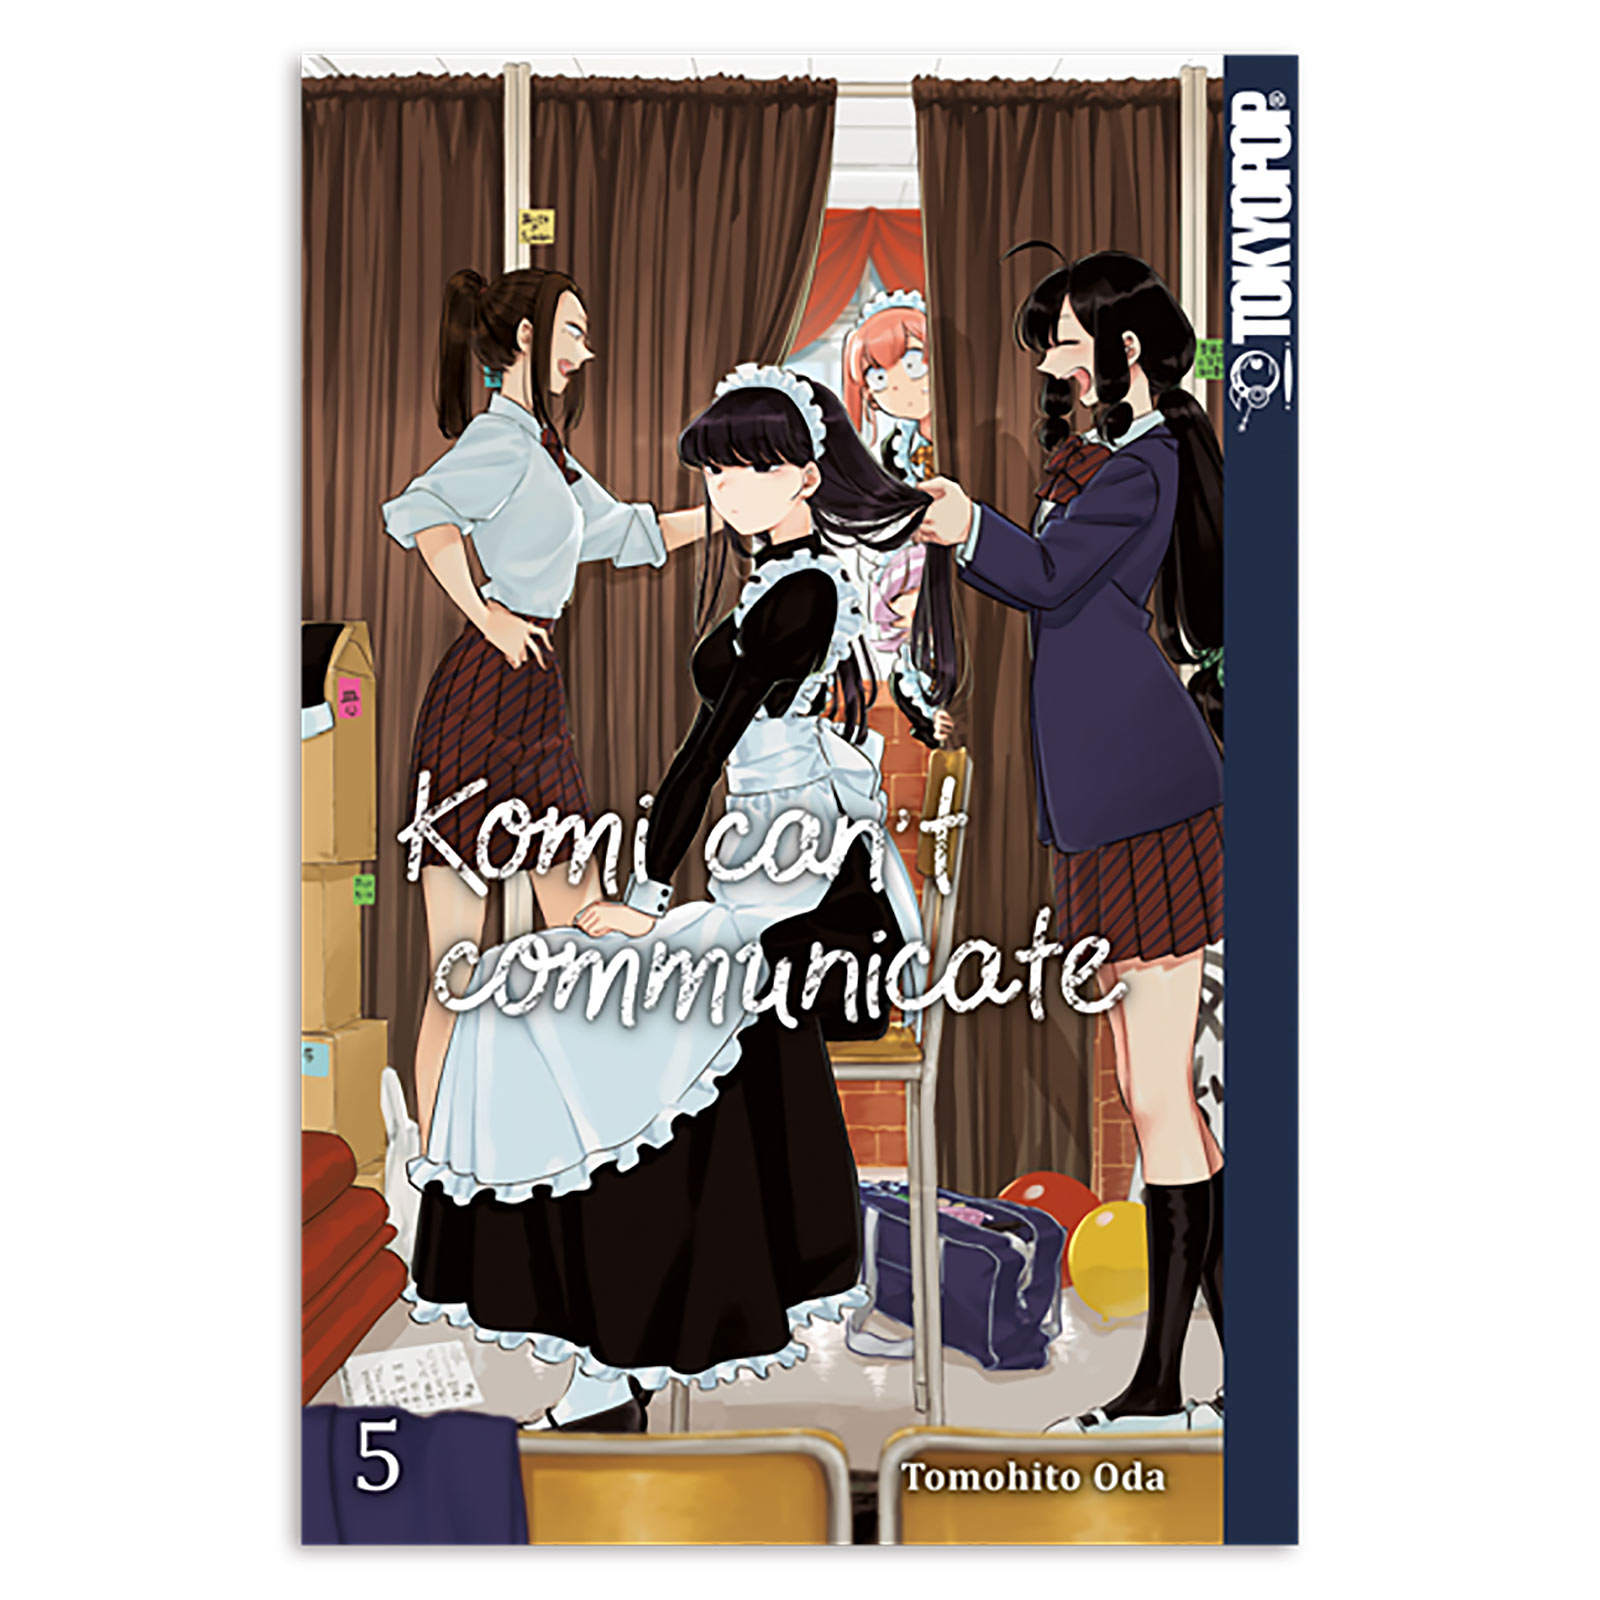 Komi can't communicate - Volume 5 Paperback